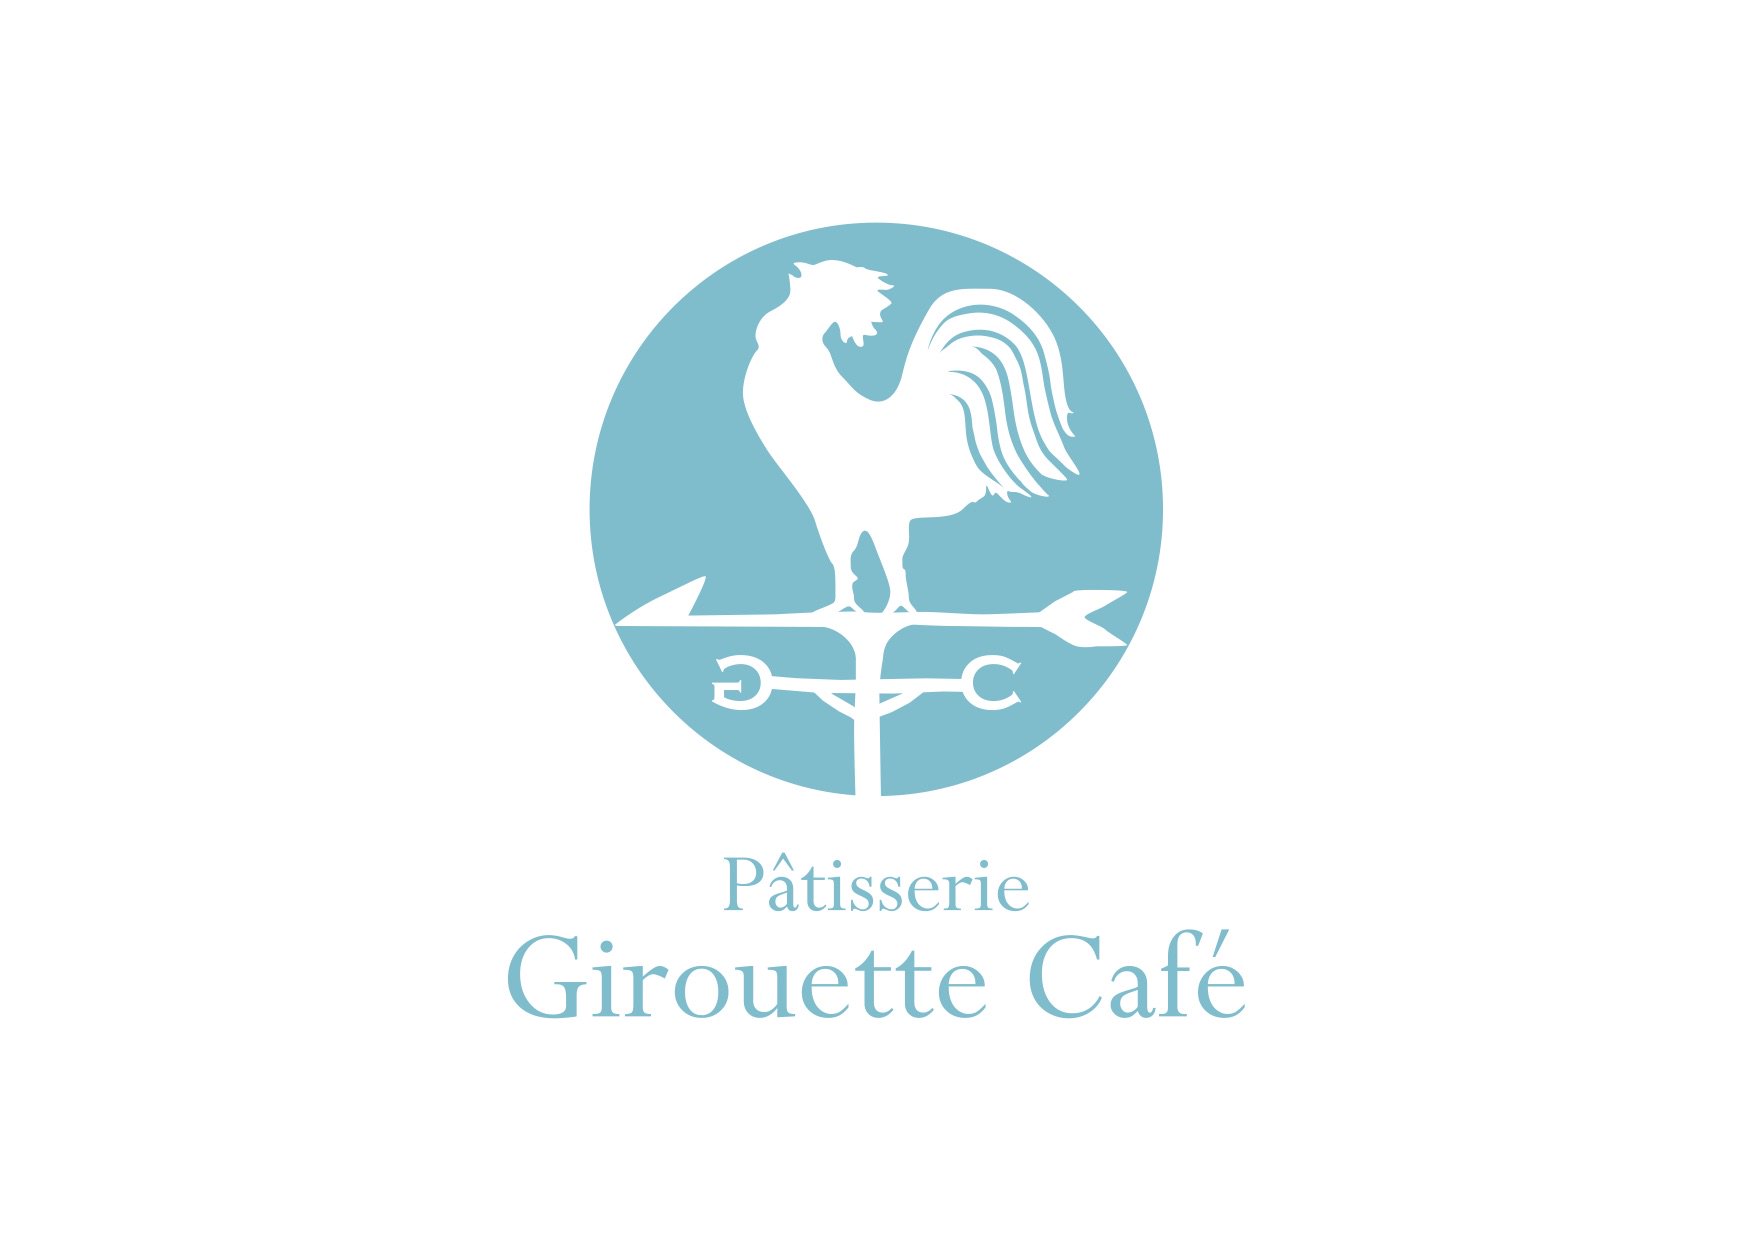 Patisserie Girouette Cafe Online Shop